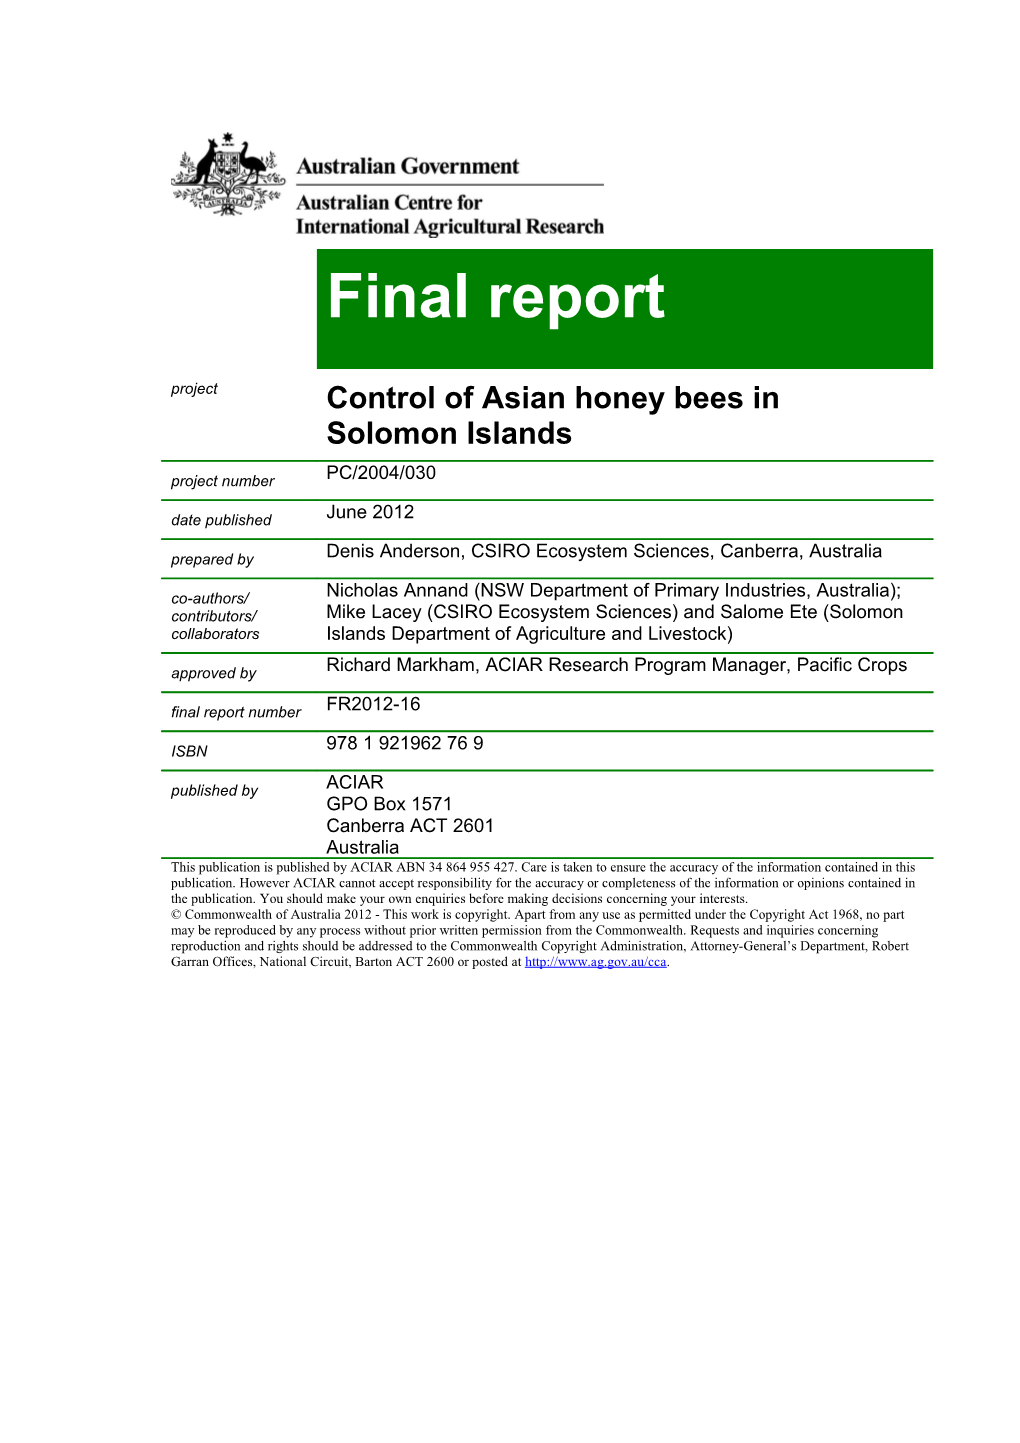 Control of Asian Honey Bees in Solomon Islands